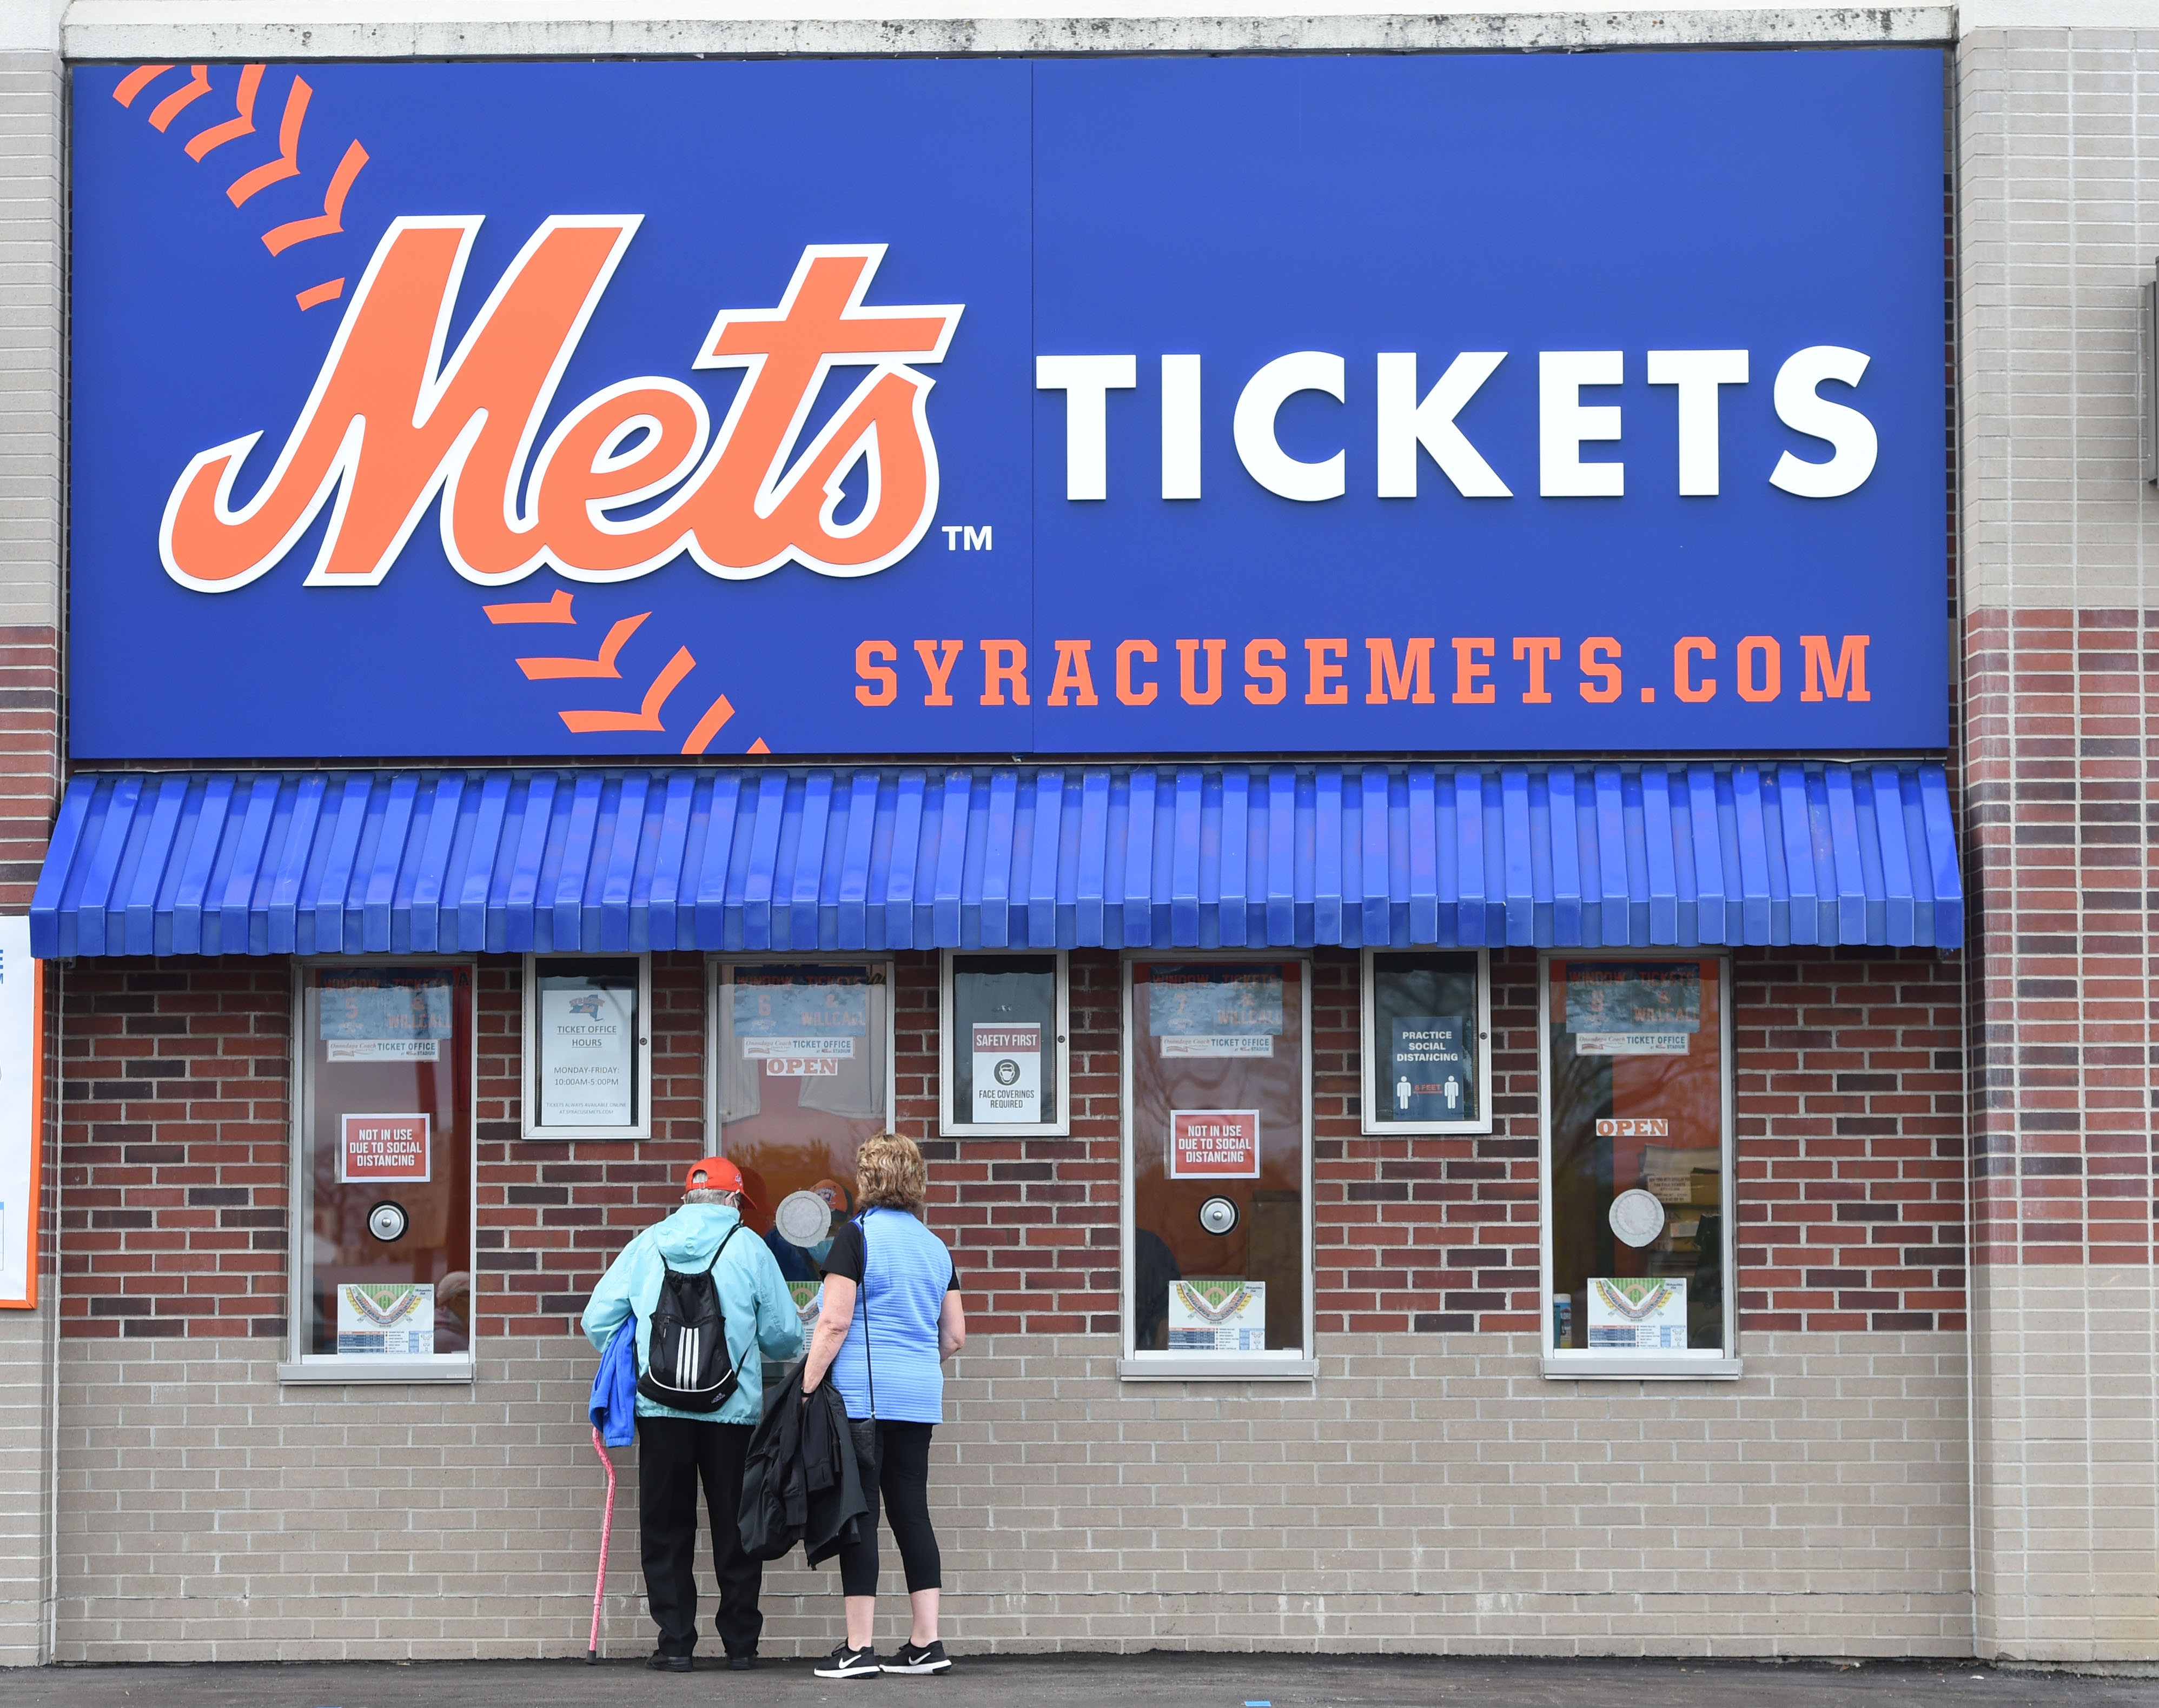 Syracuse Mets Brick Program